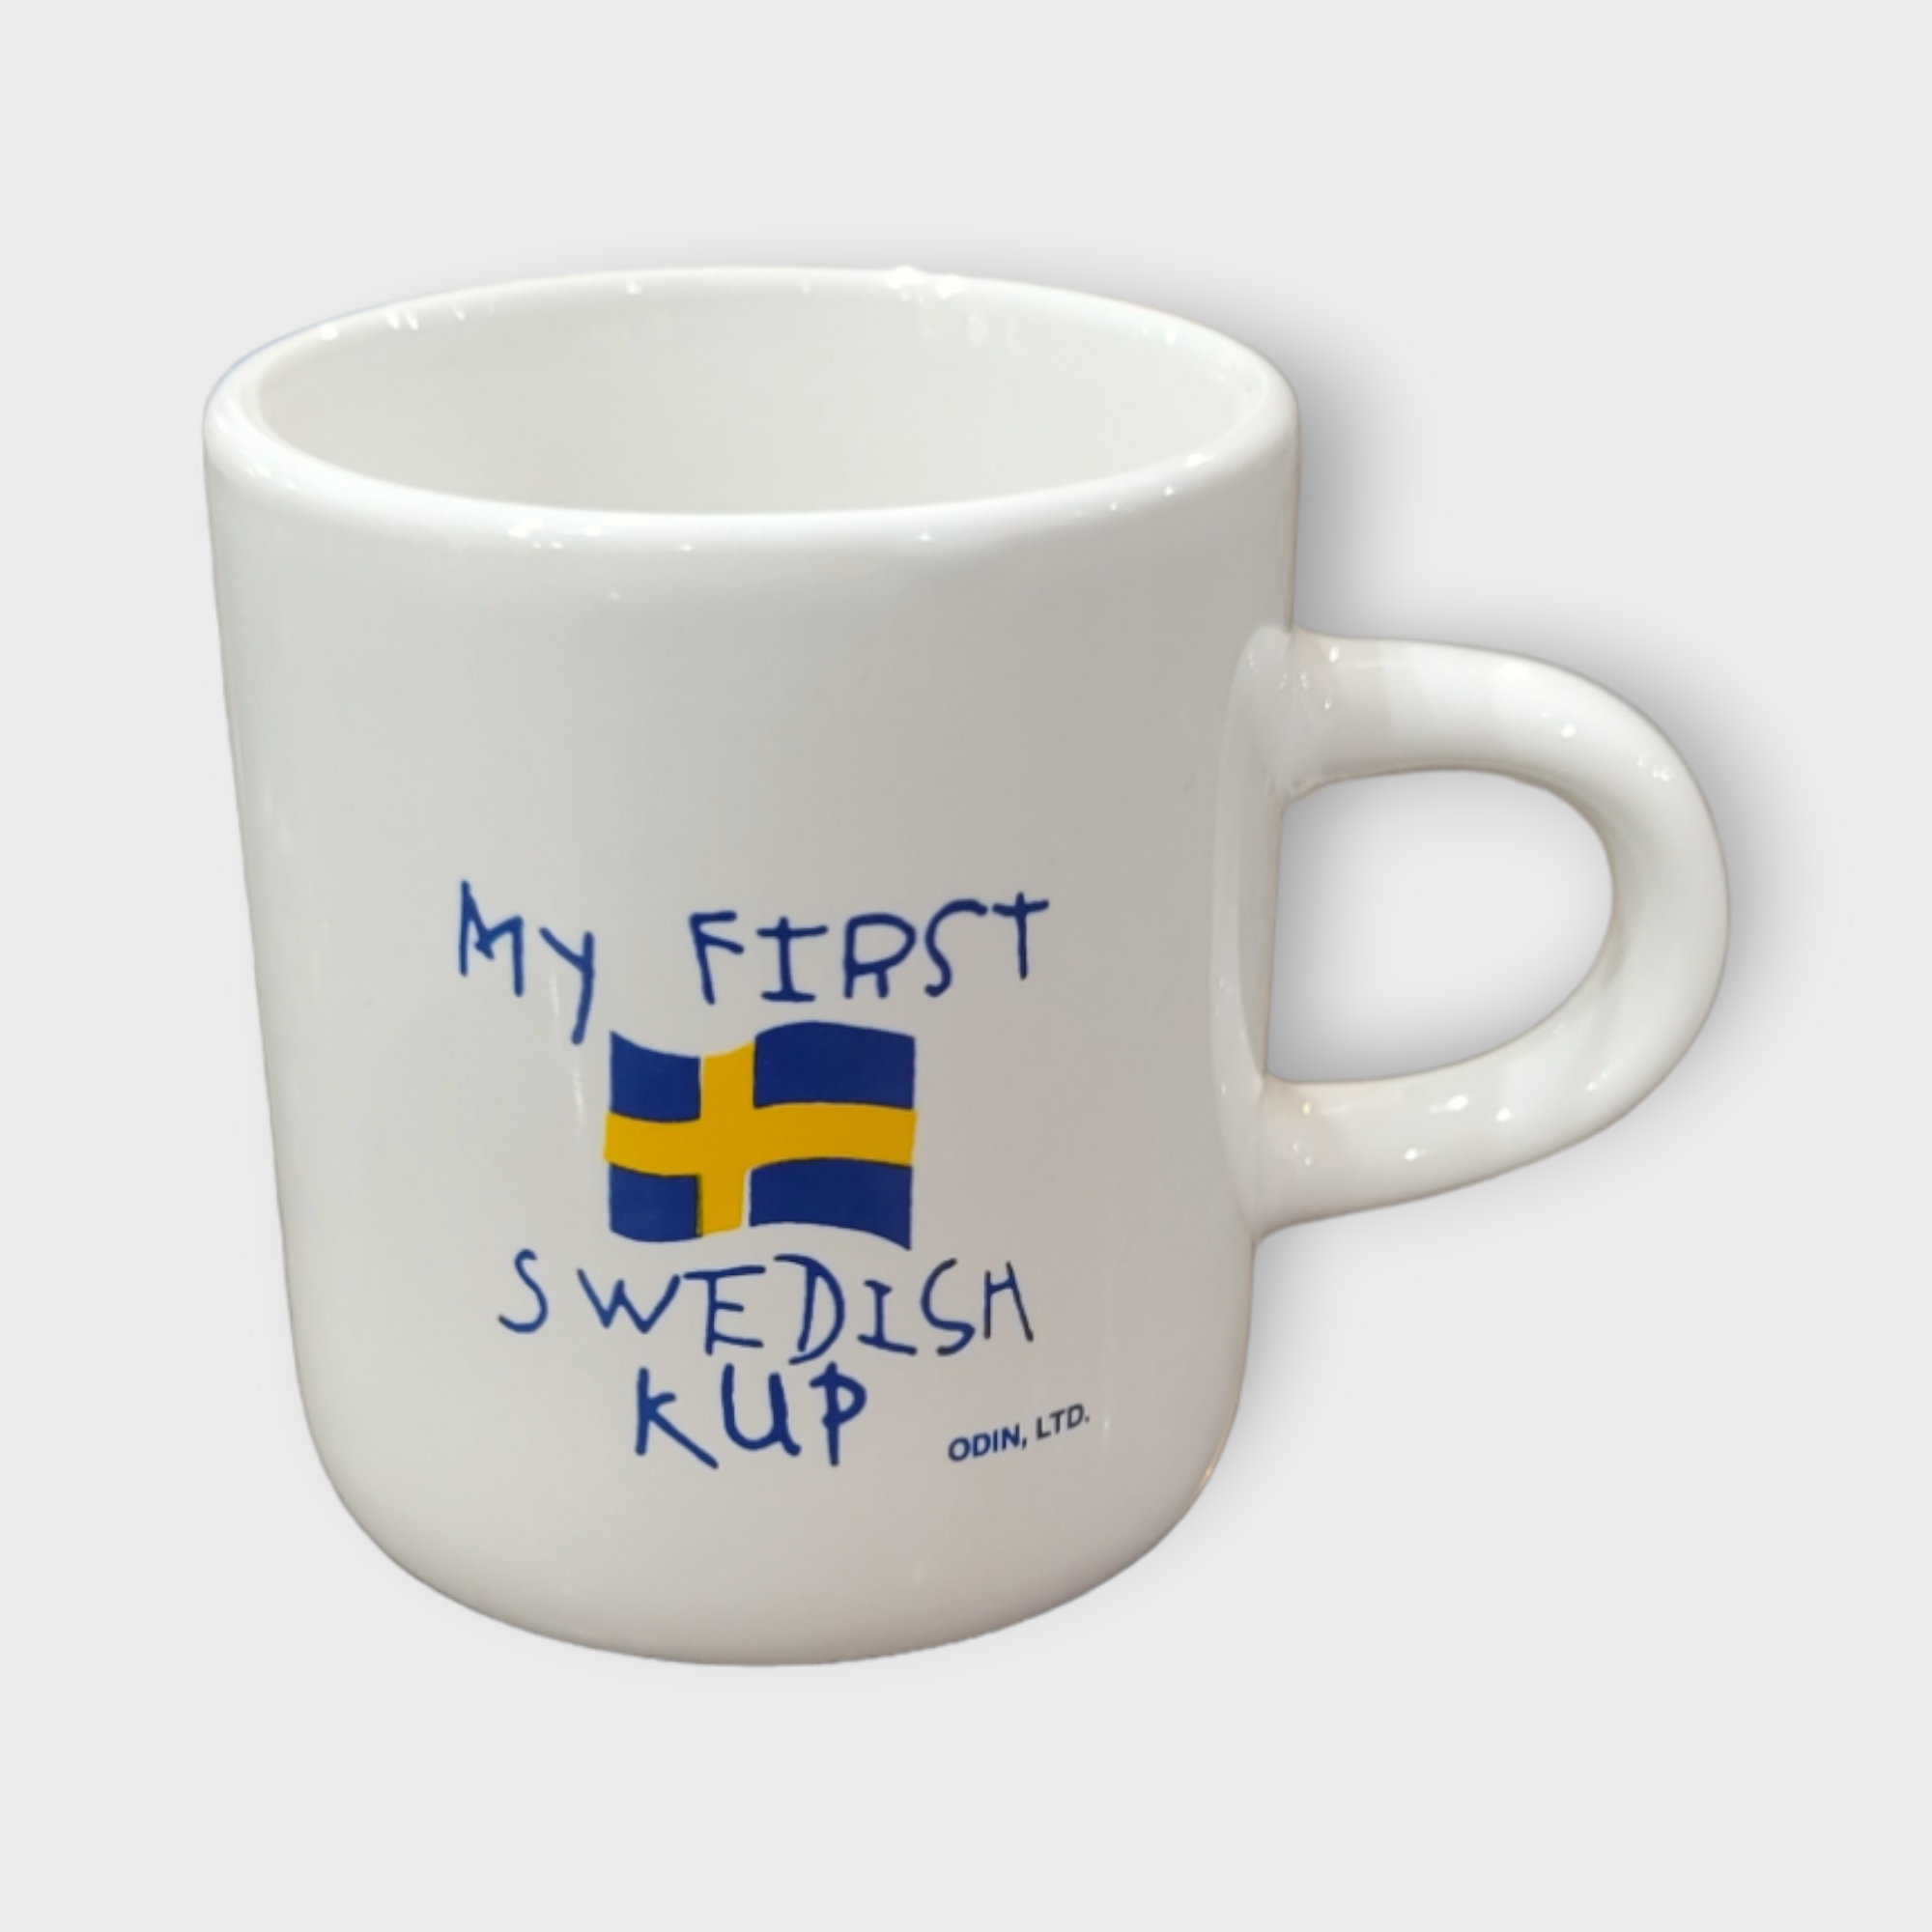 Mug: "My First Swedish Kup"